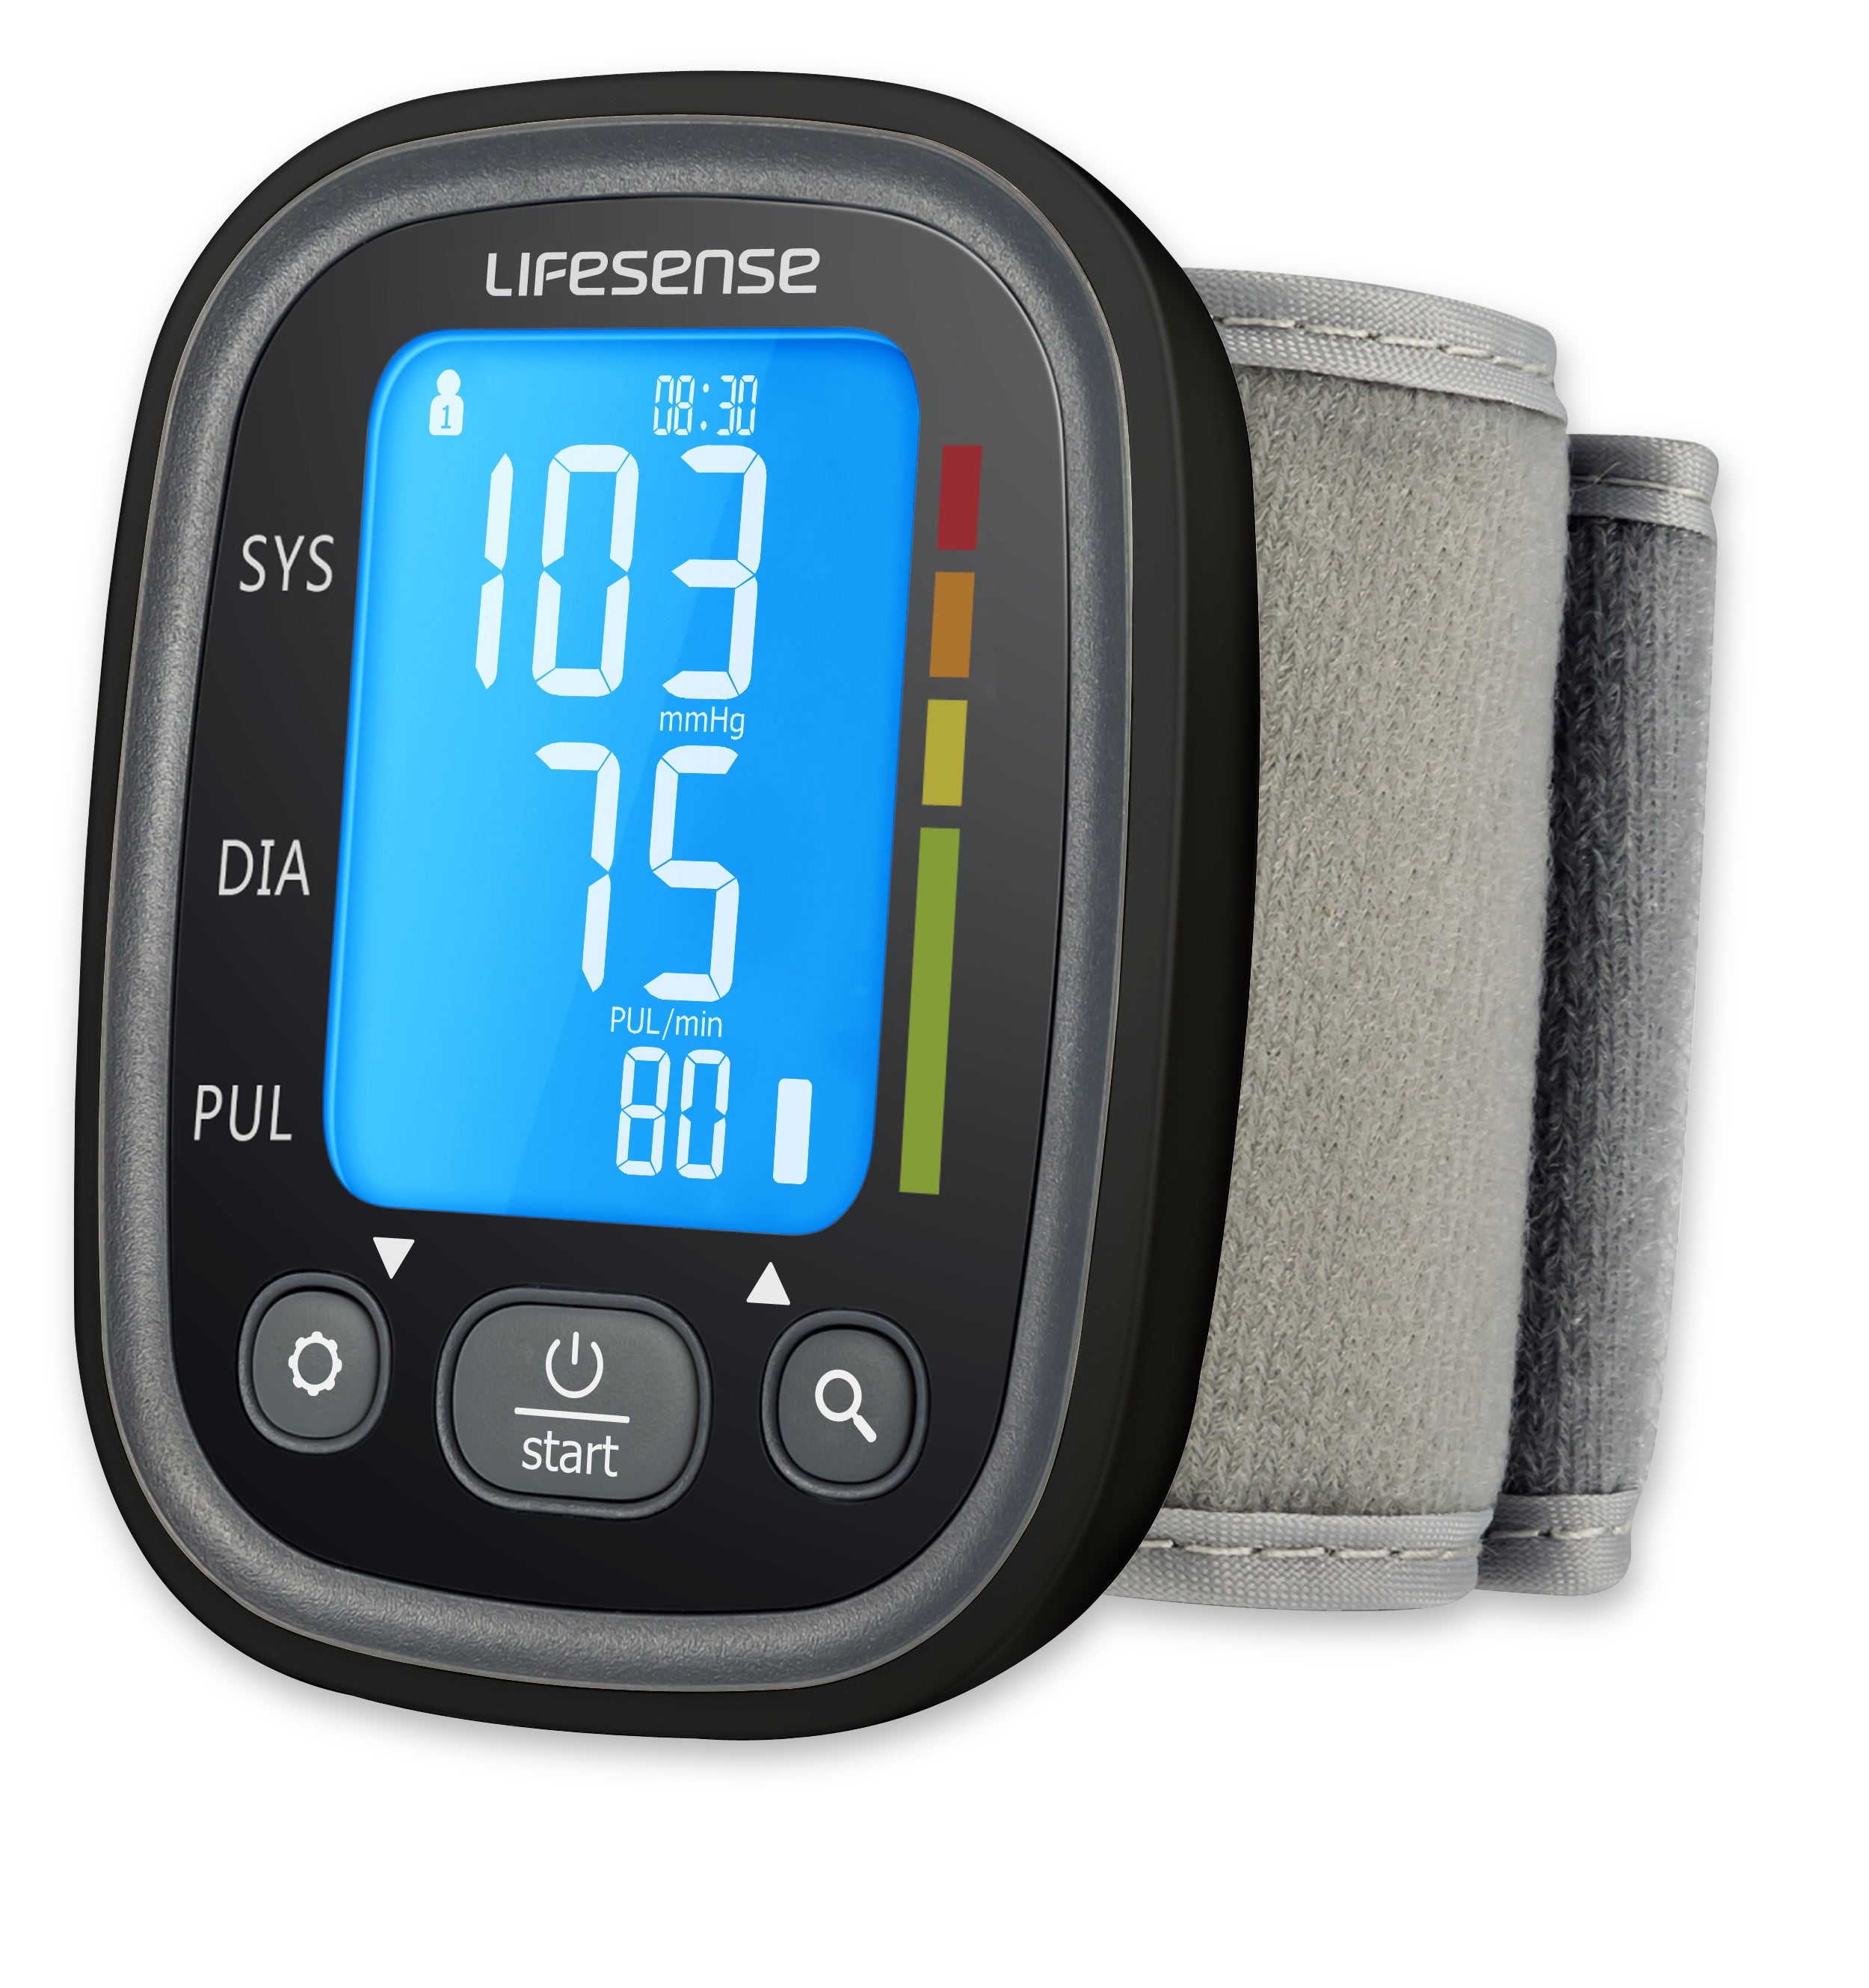 Lifesense Digital wrist blood pressure monitor Black with blue backlight screen